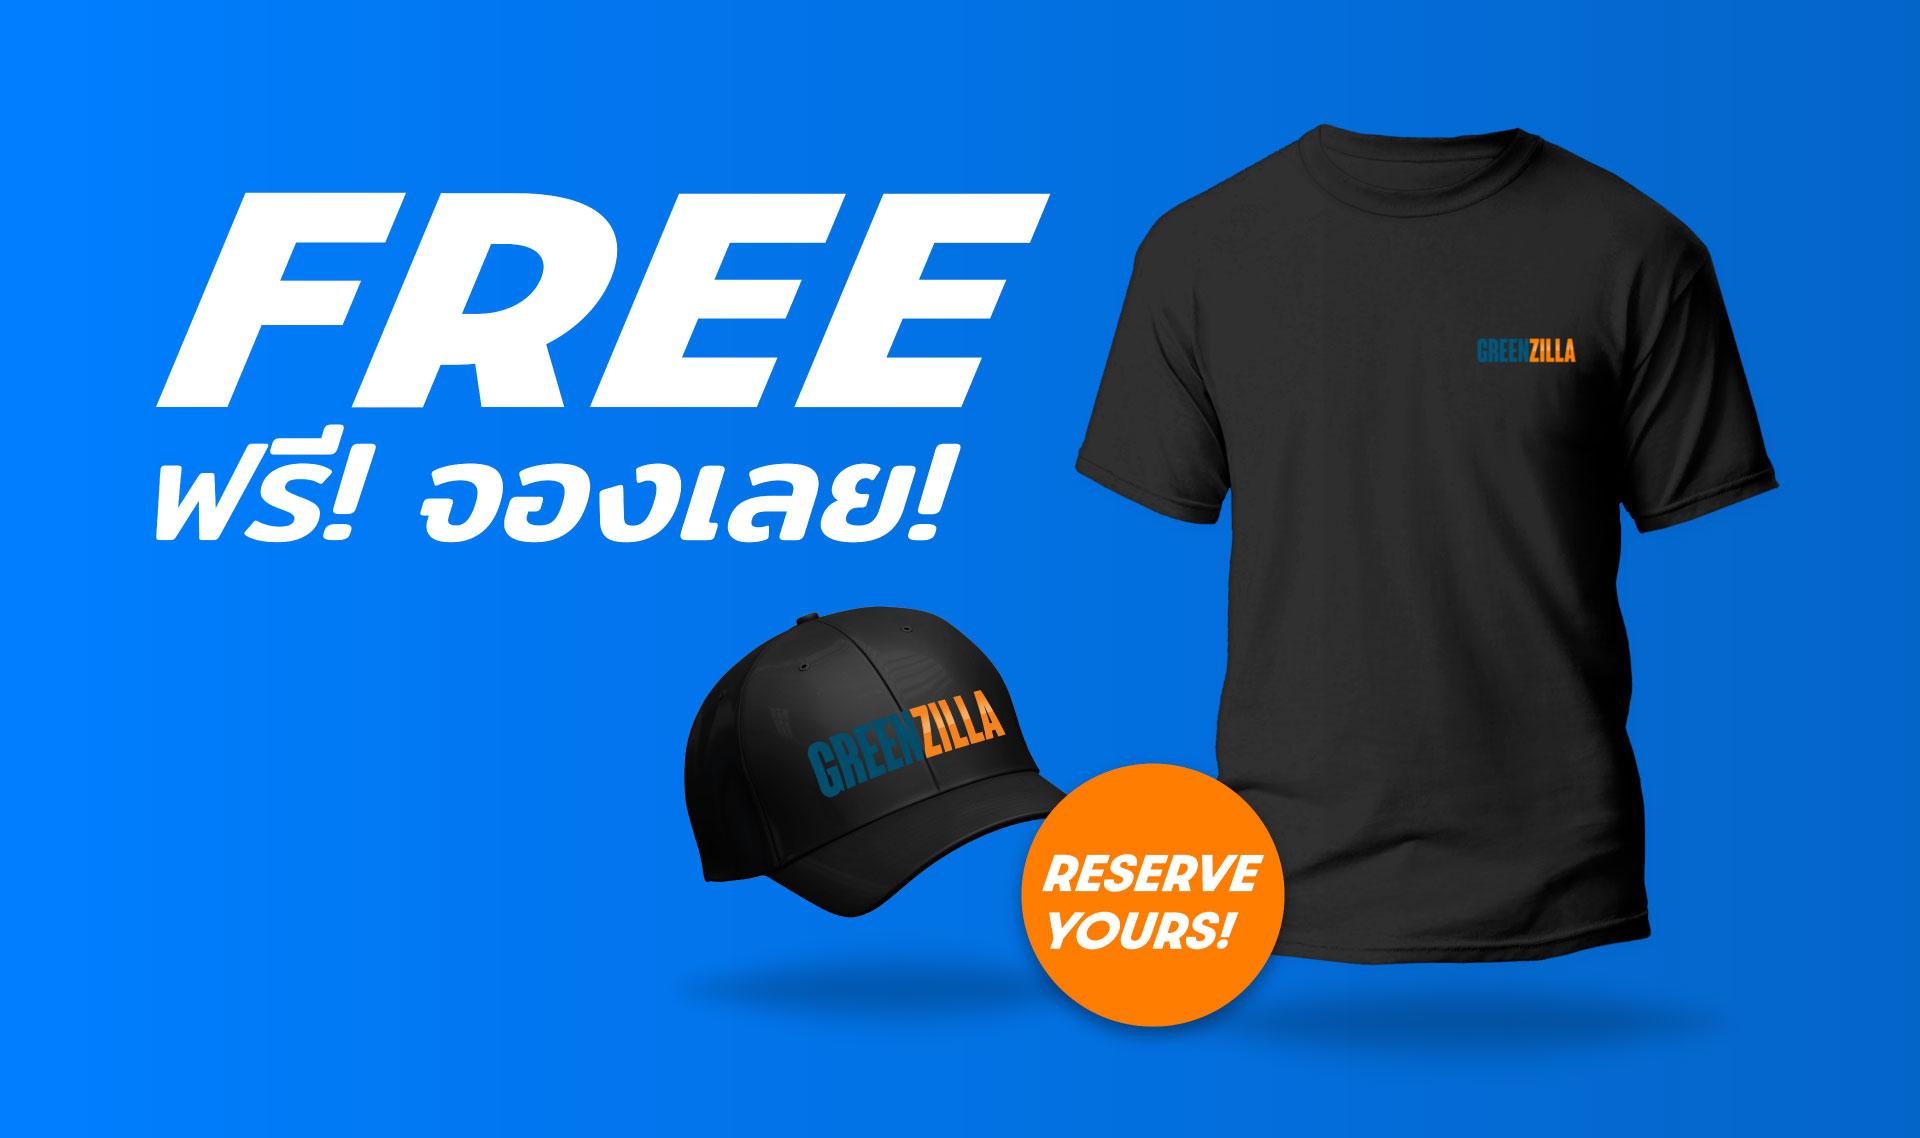 Greenzilla's free shirt & cap